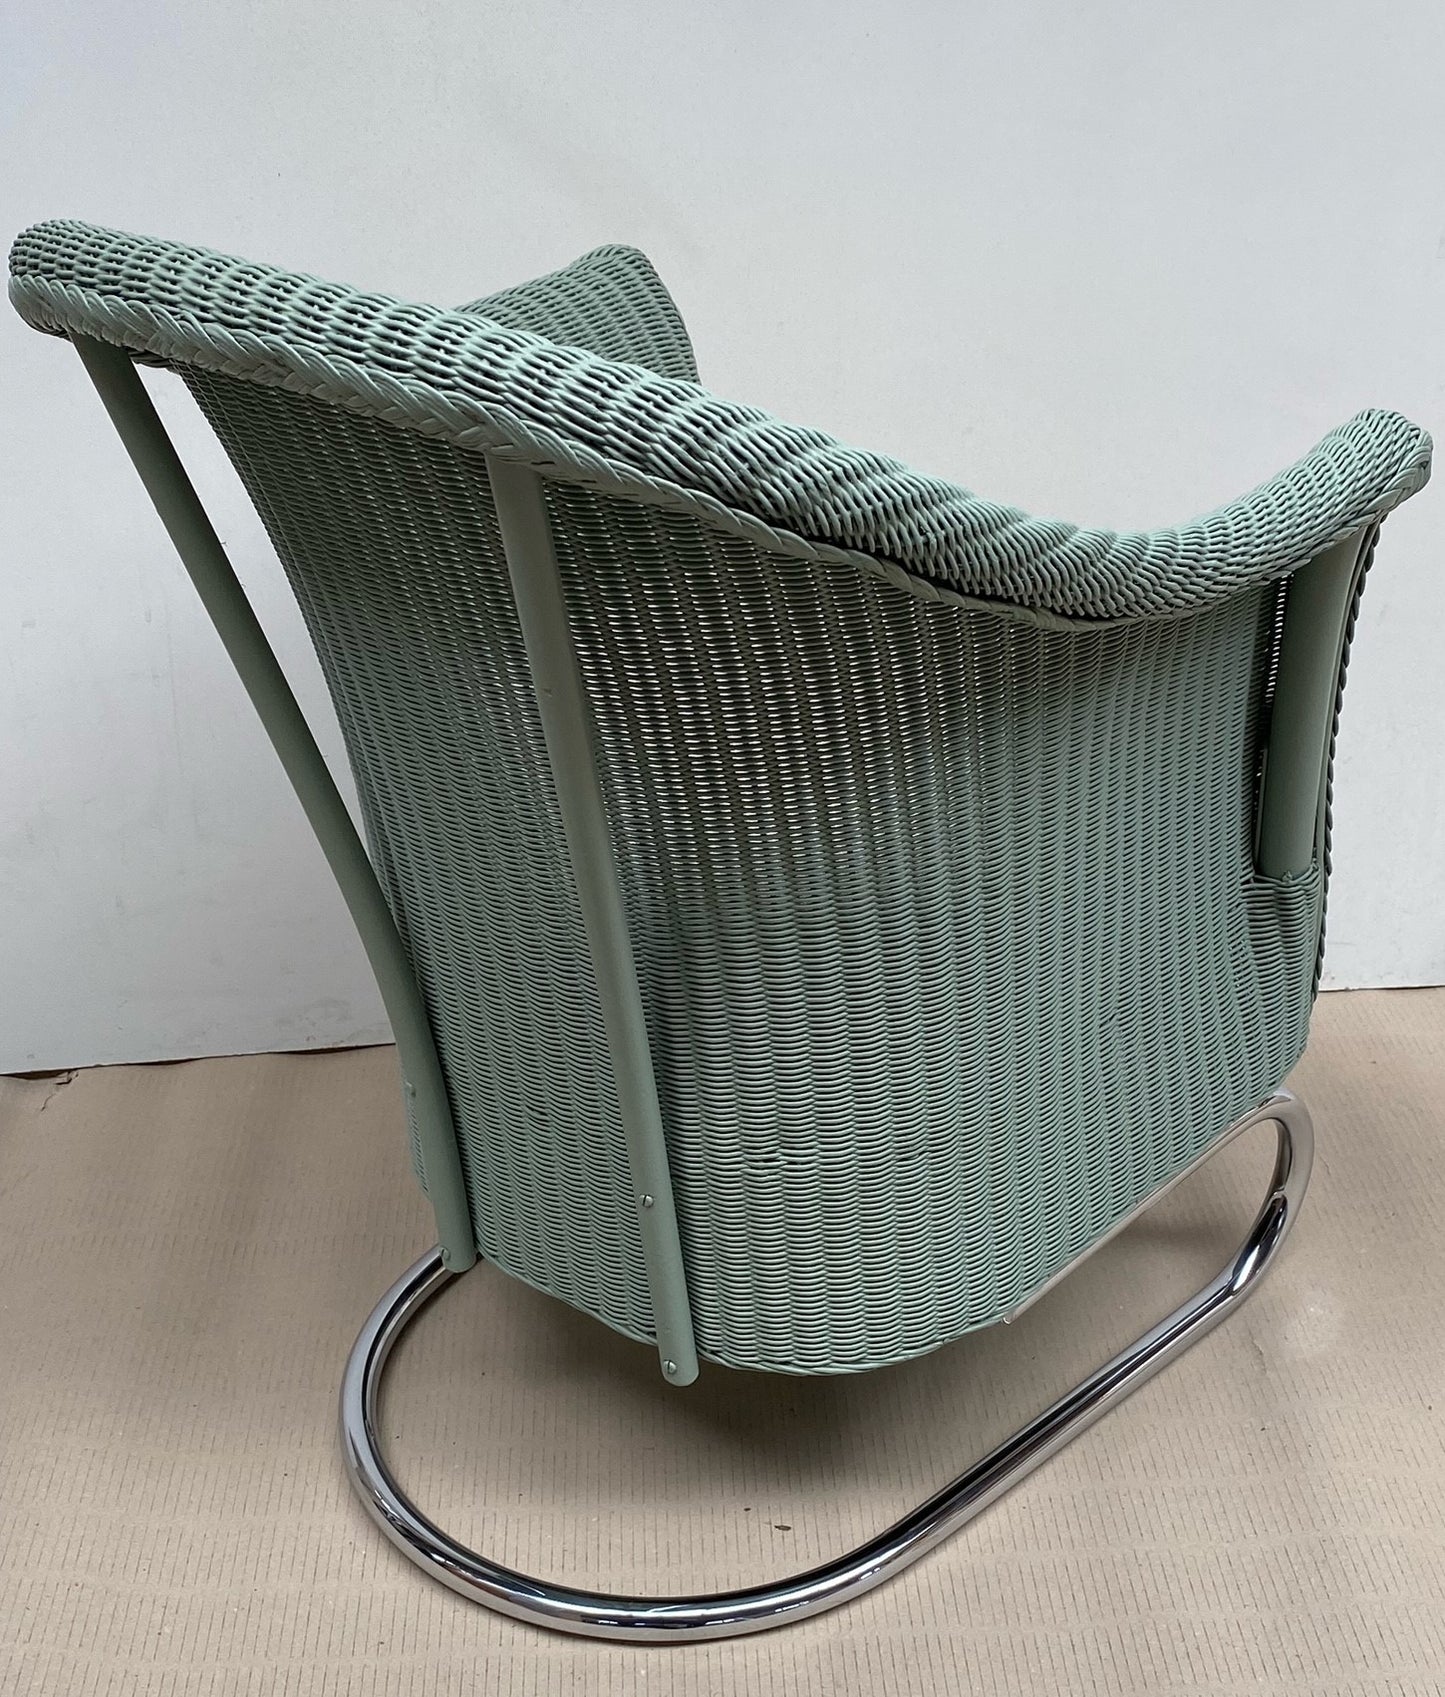 Refurbished Rare Vintage Chrome Bauhaus inspired Lloyd loom Armchair in Artichoke